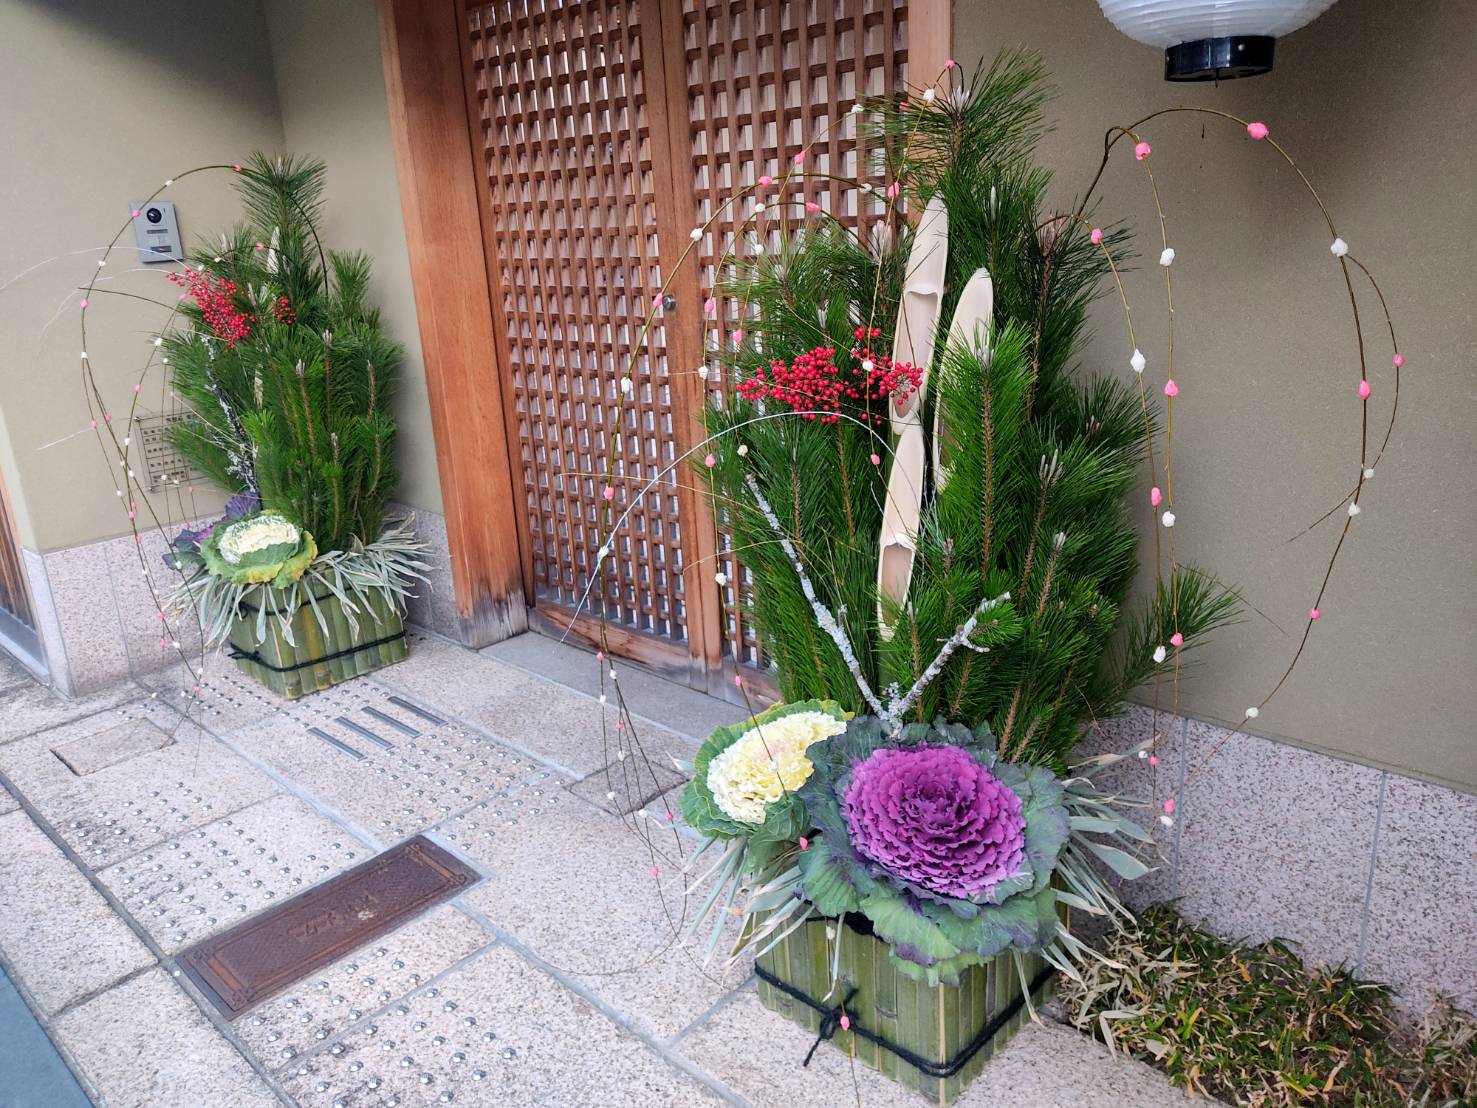 large kadomatsu New Year decorations on sides of doorway